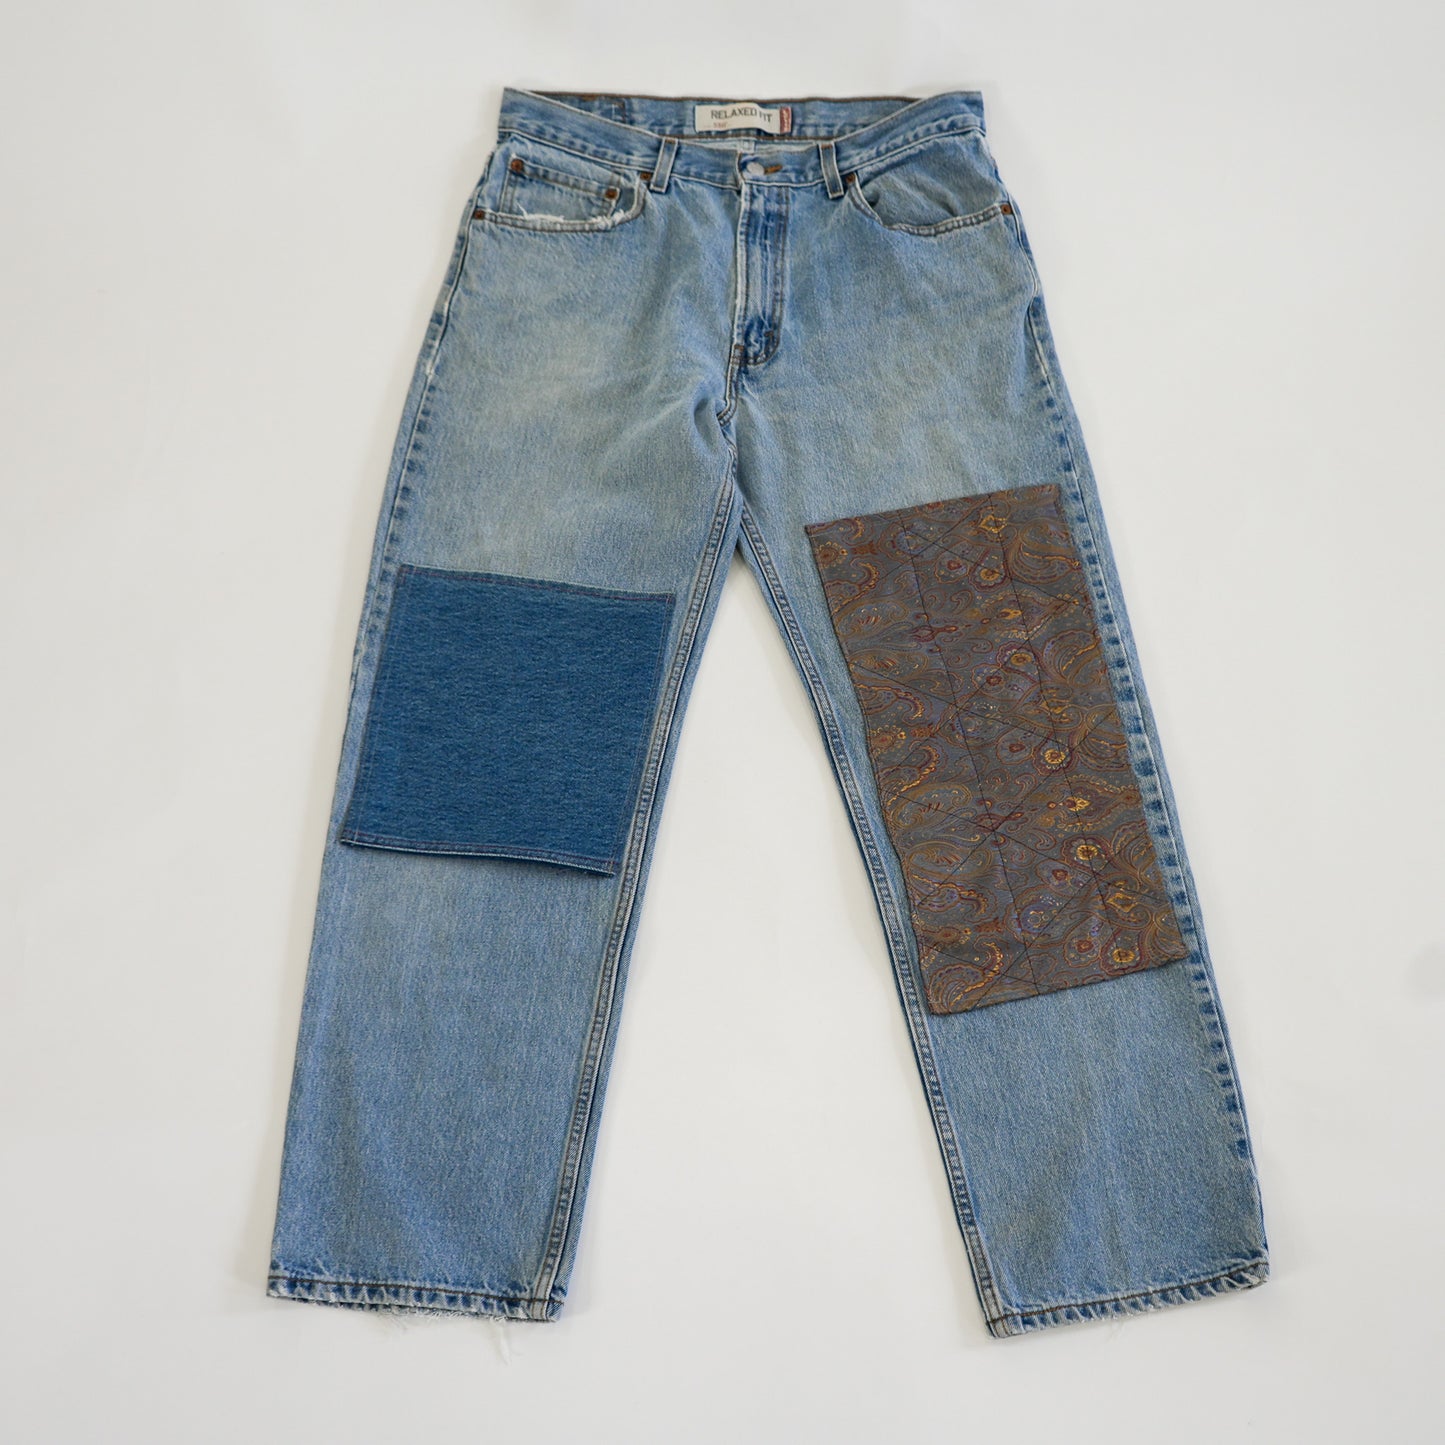 Brocade & Denim Patchwork Jeans (W 42)